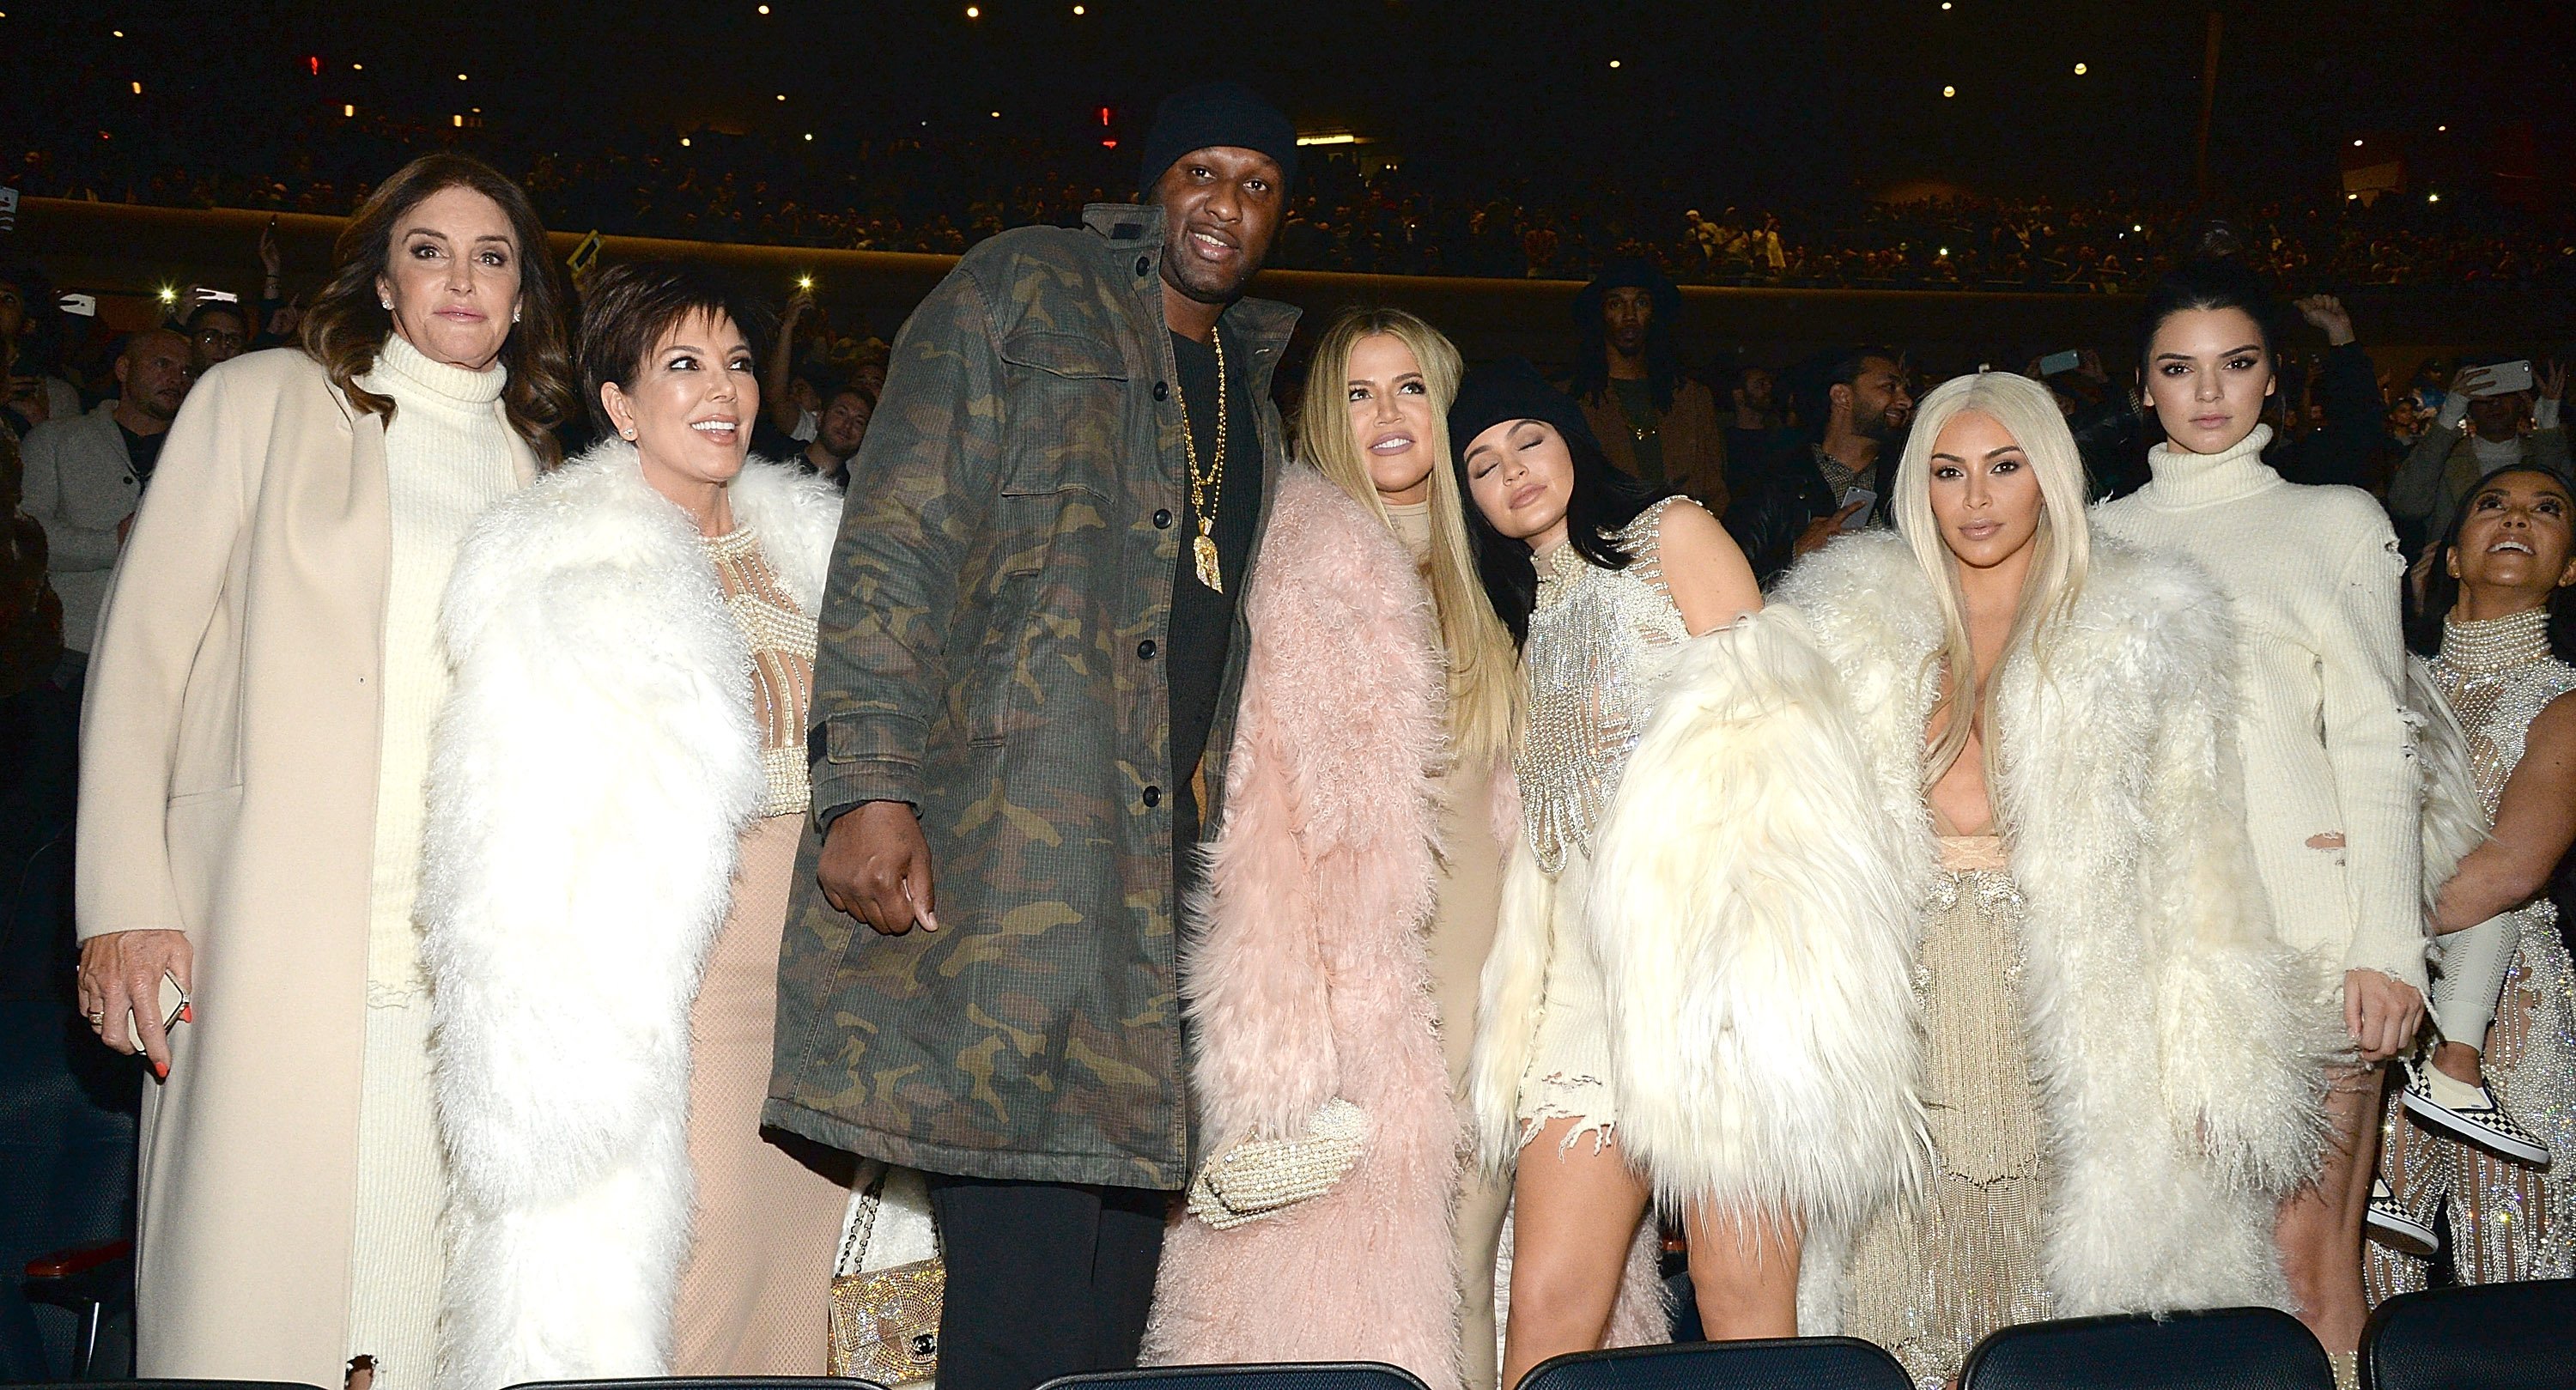 Caitlyn Jenner, Kris Jenner, Lamar Odom, Khloe Jenner, Kylie Jenner, Kim Kardashian West, Kendall Jenner, North West and Kourtney Kardashian wearing Yeezy clothes at Kanye West's fashion show.